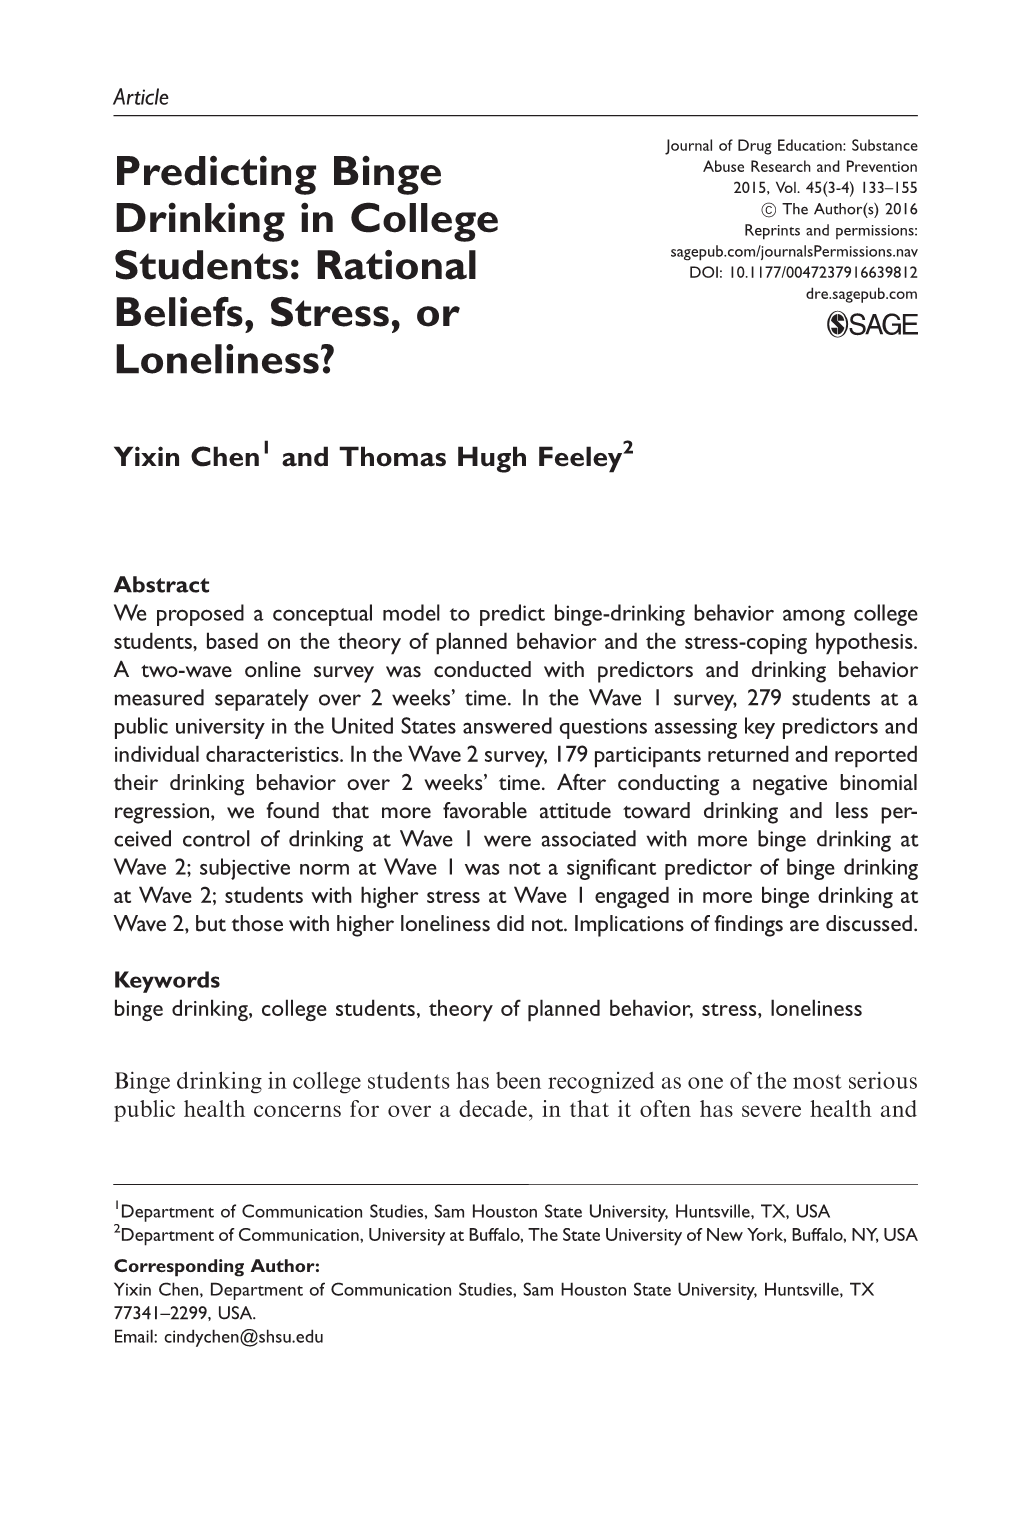 Predicting Binge Drinking in College Students: Rational Beliefs, Stress